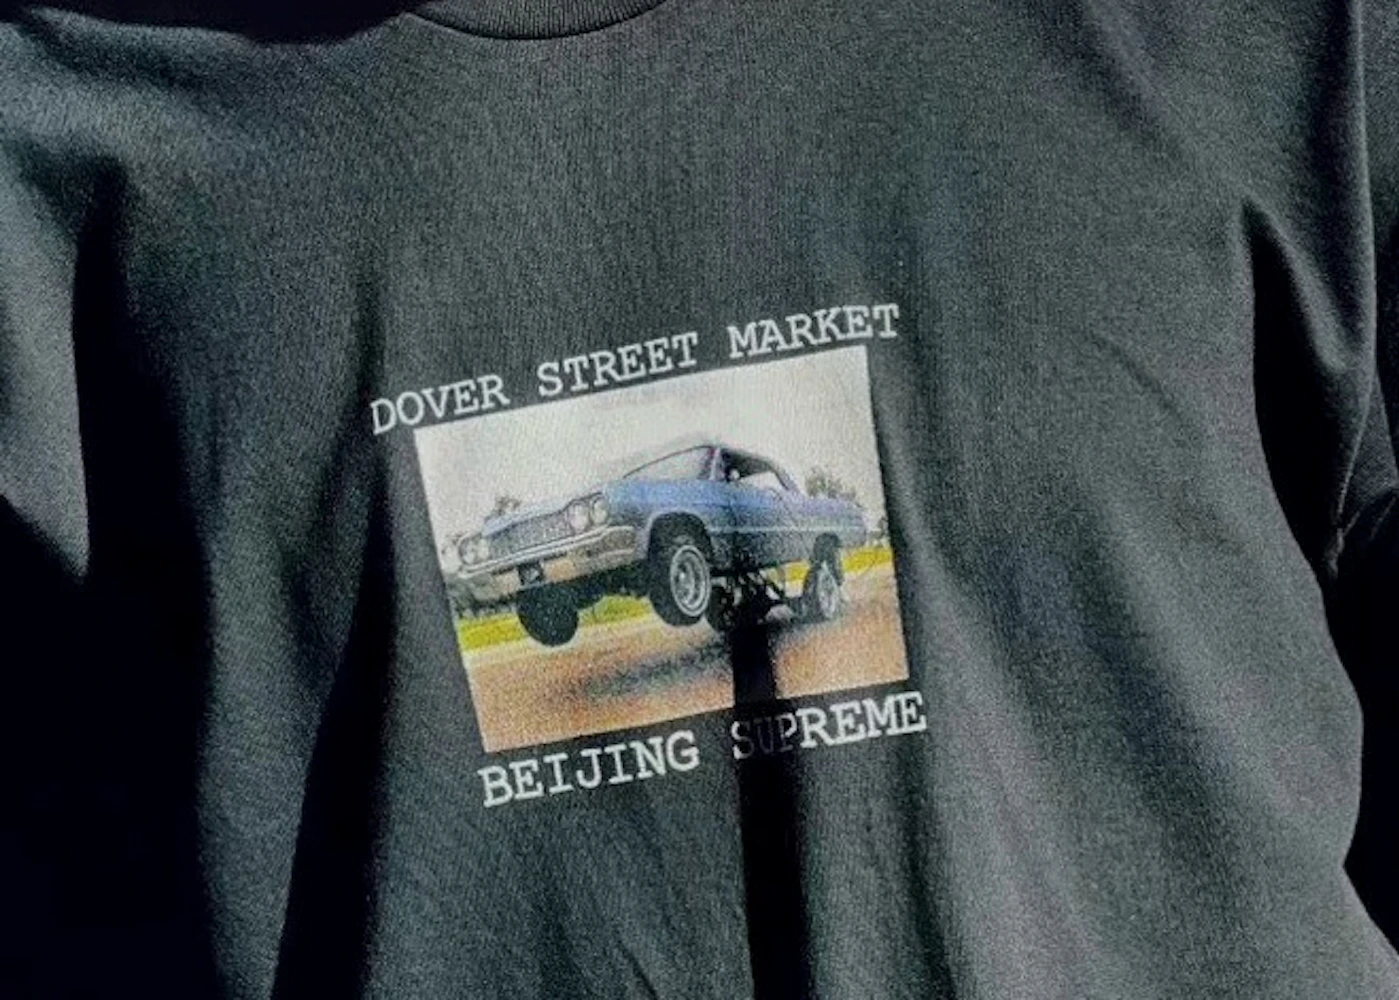 Dover Street Market Beijing Relocates After 12 Years – WWD